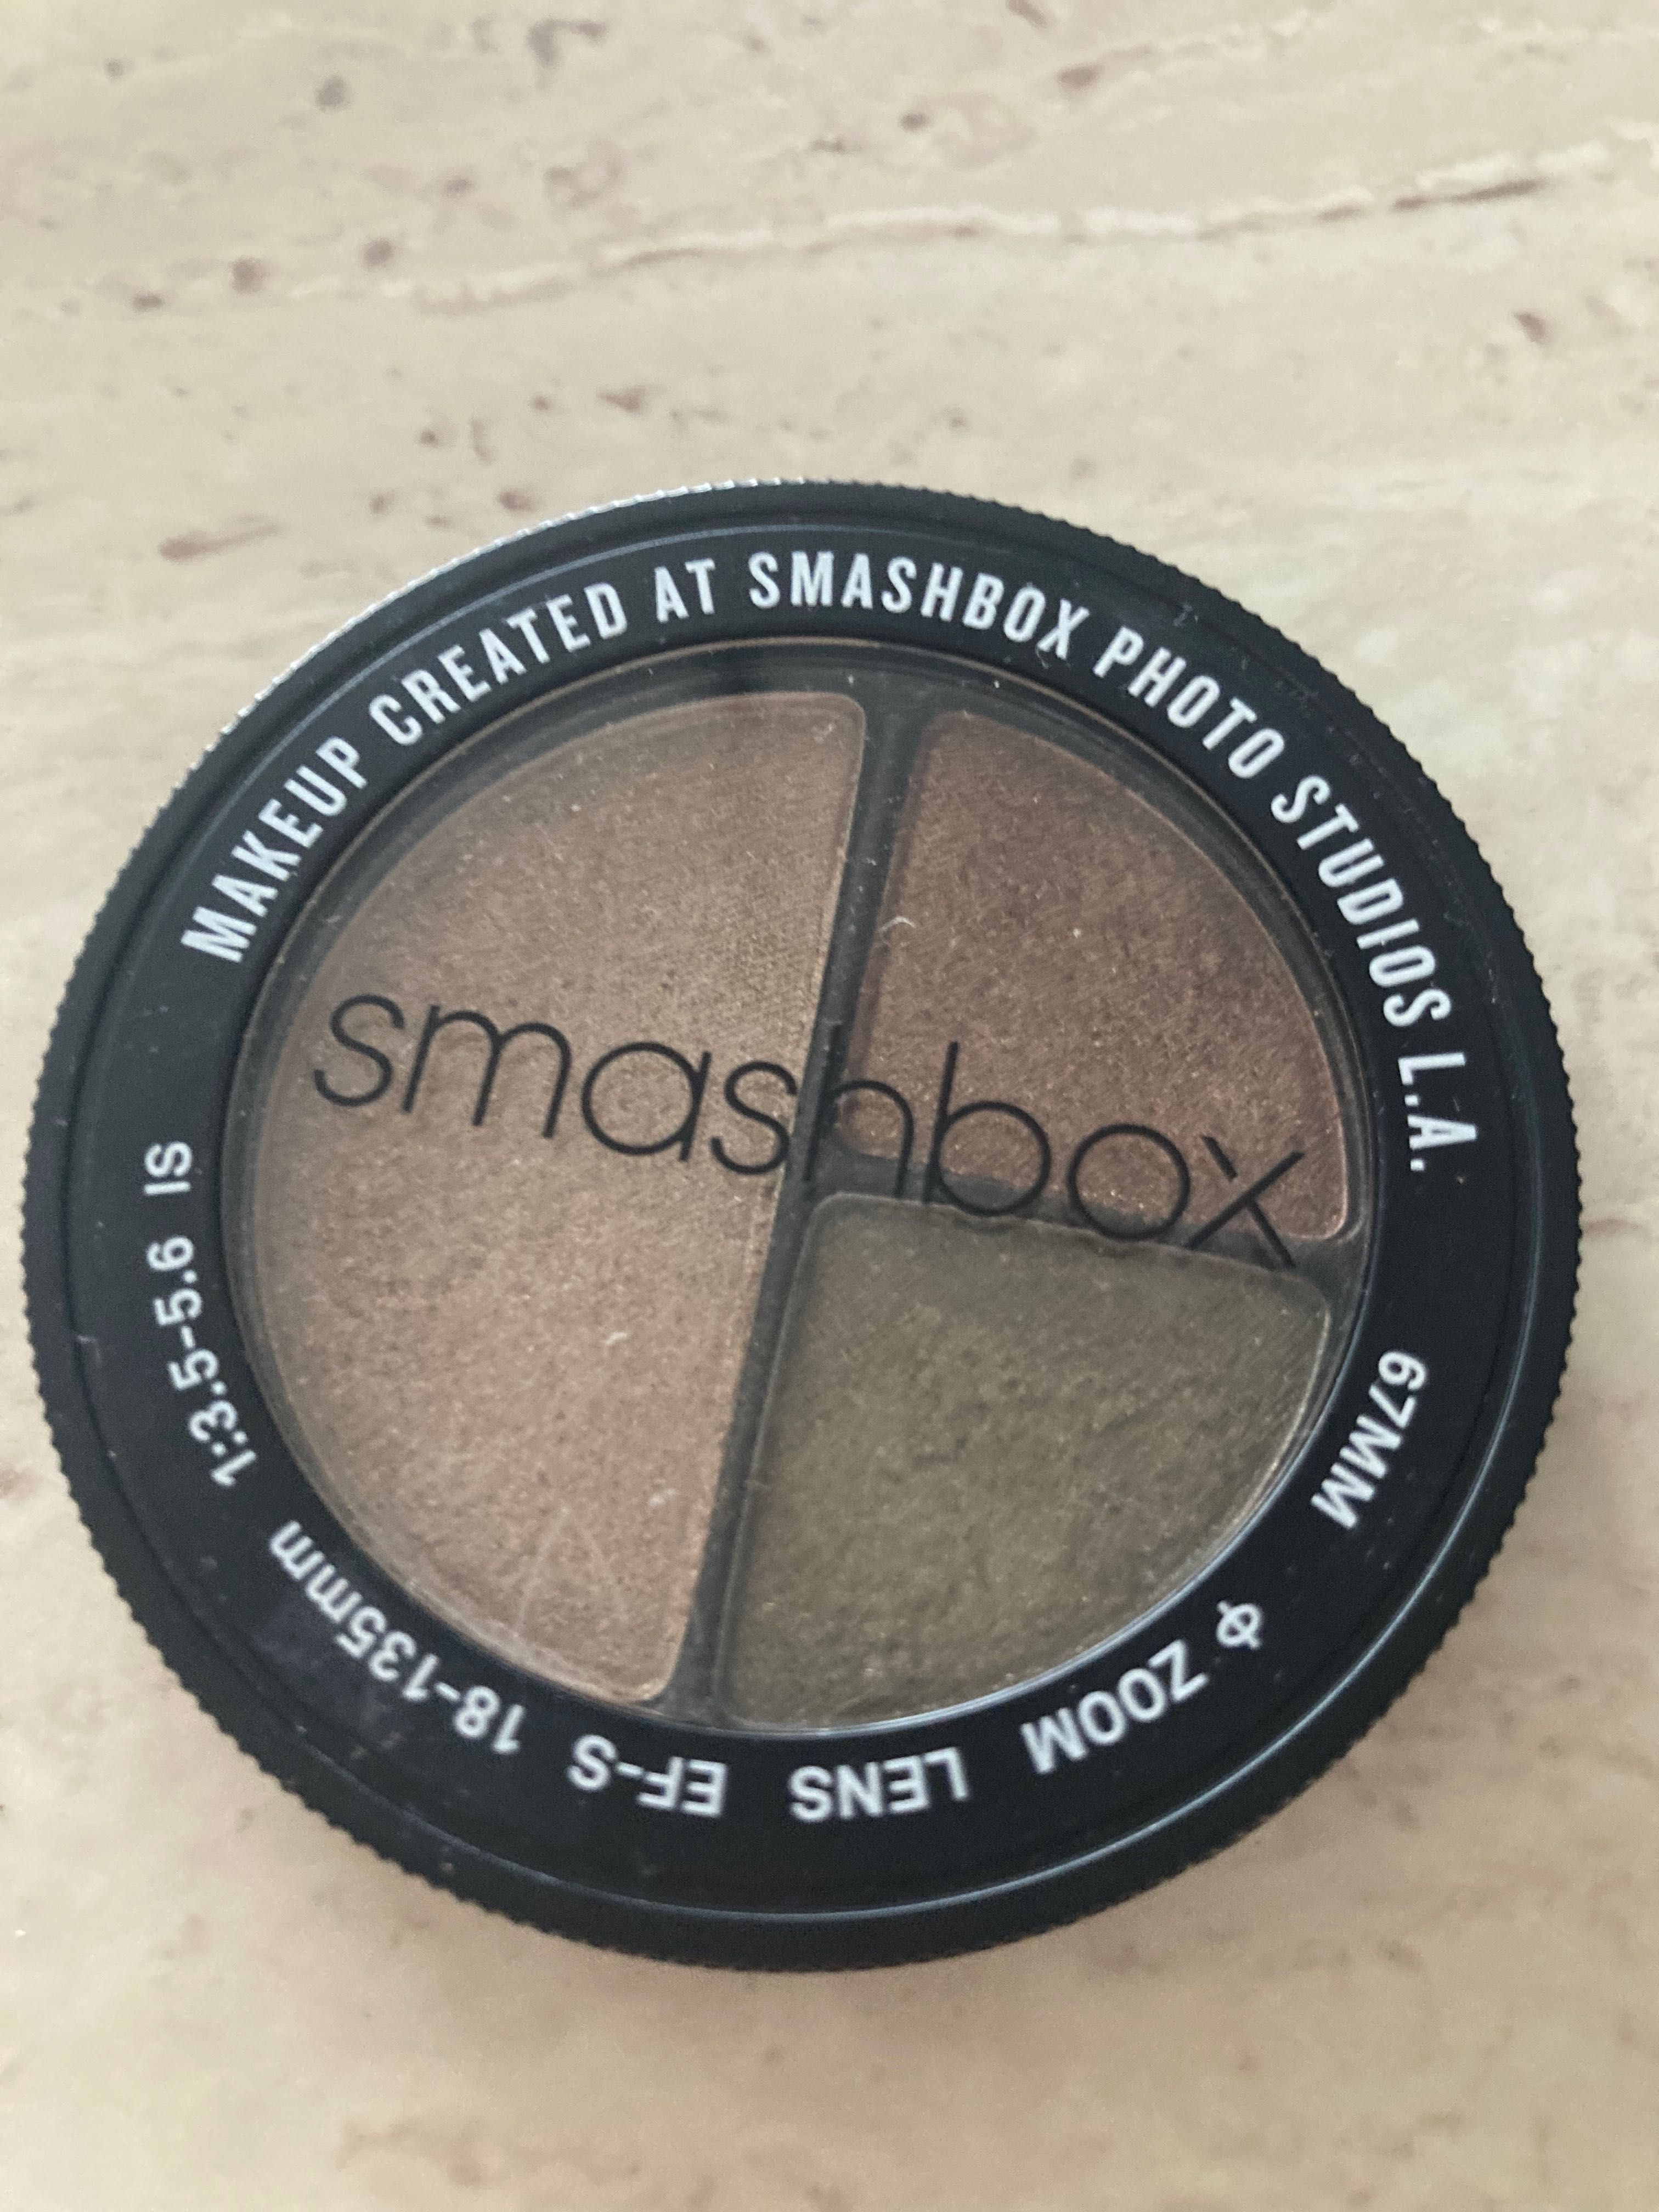 Smashbox photo edit eyeshadow trio